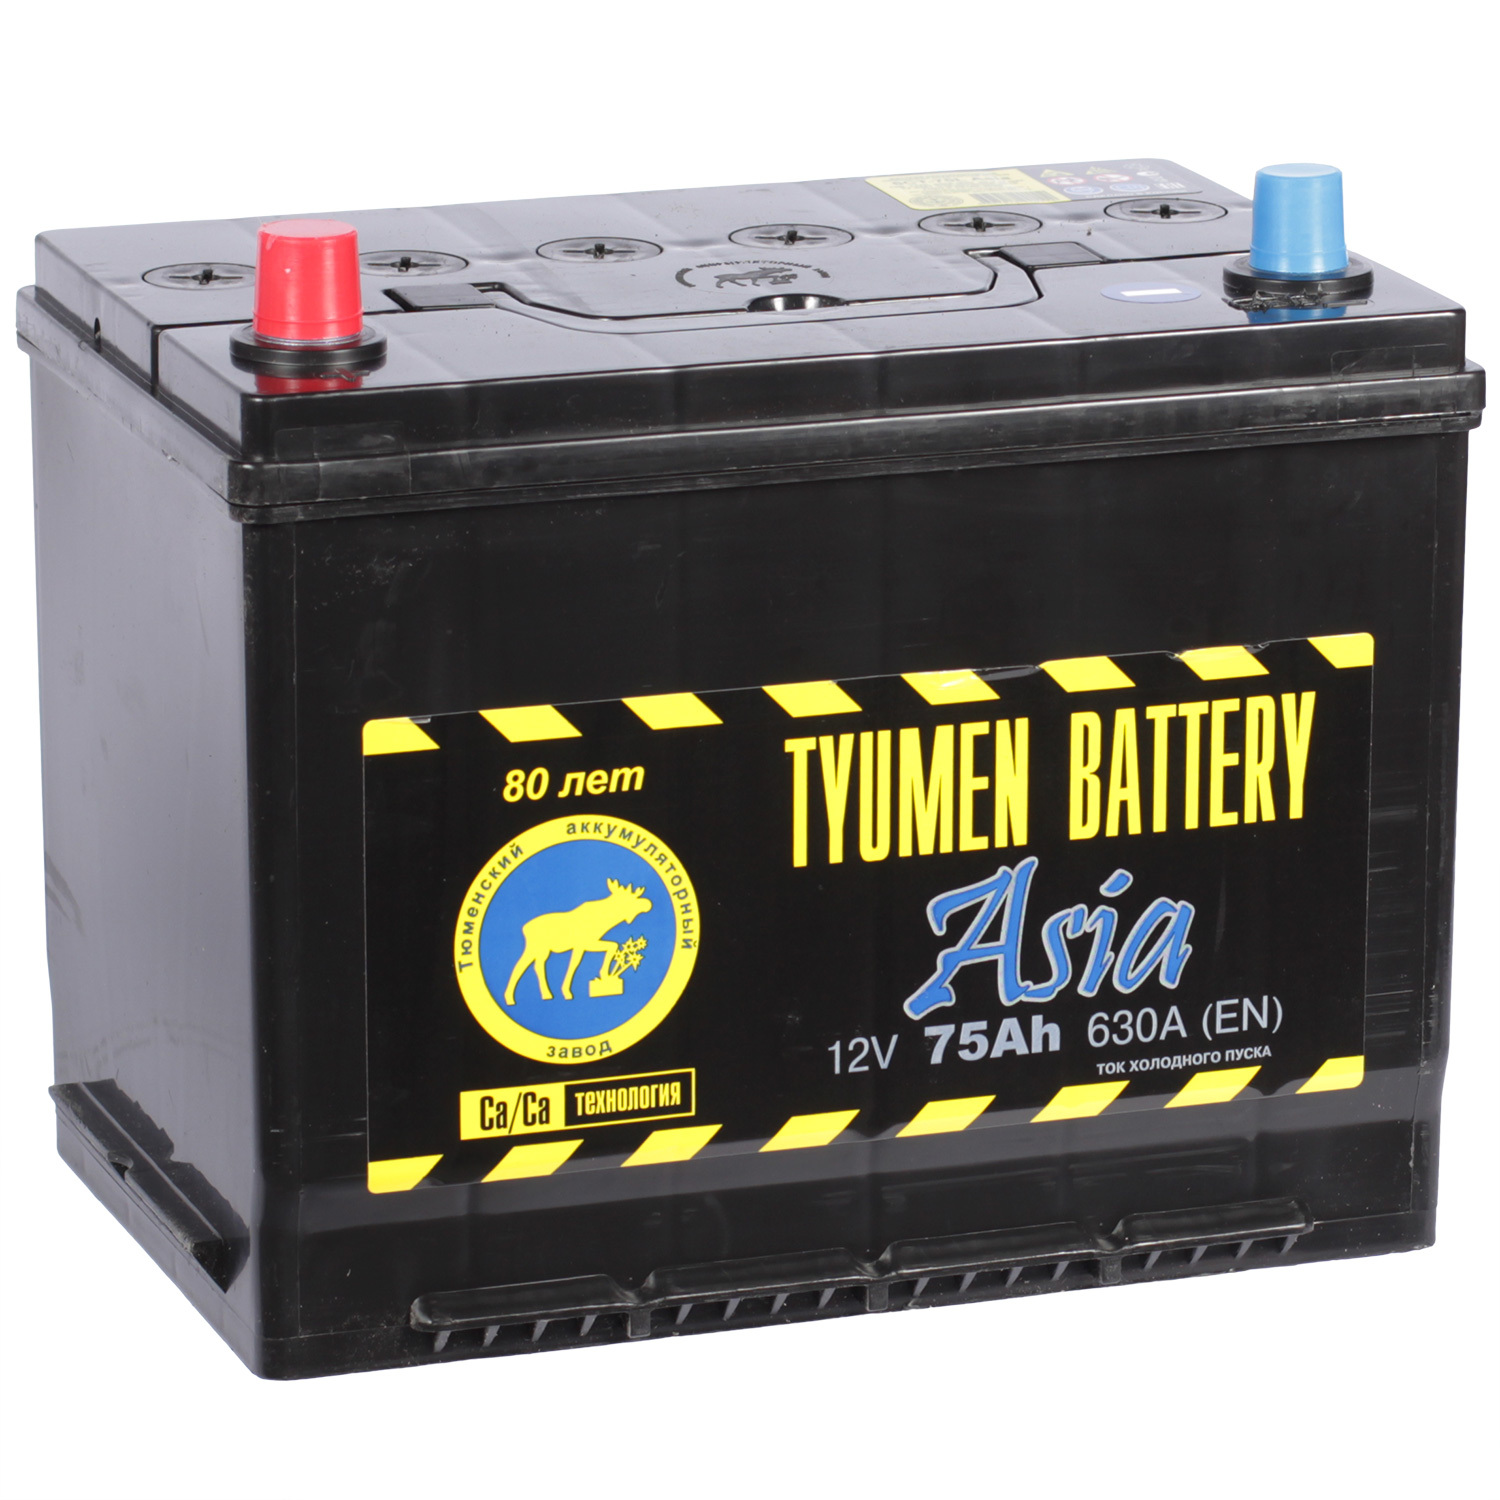 Tyumen Battery Автомобильный аккумулятор Tyumen Battery Asia 75 Ач прямая полярность D26R tyumen battery автомобильный аккумулятор tyumen battery asia 40 ач обратная полярность b19l